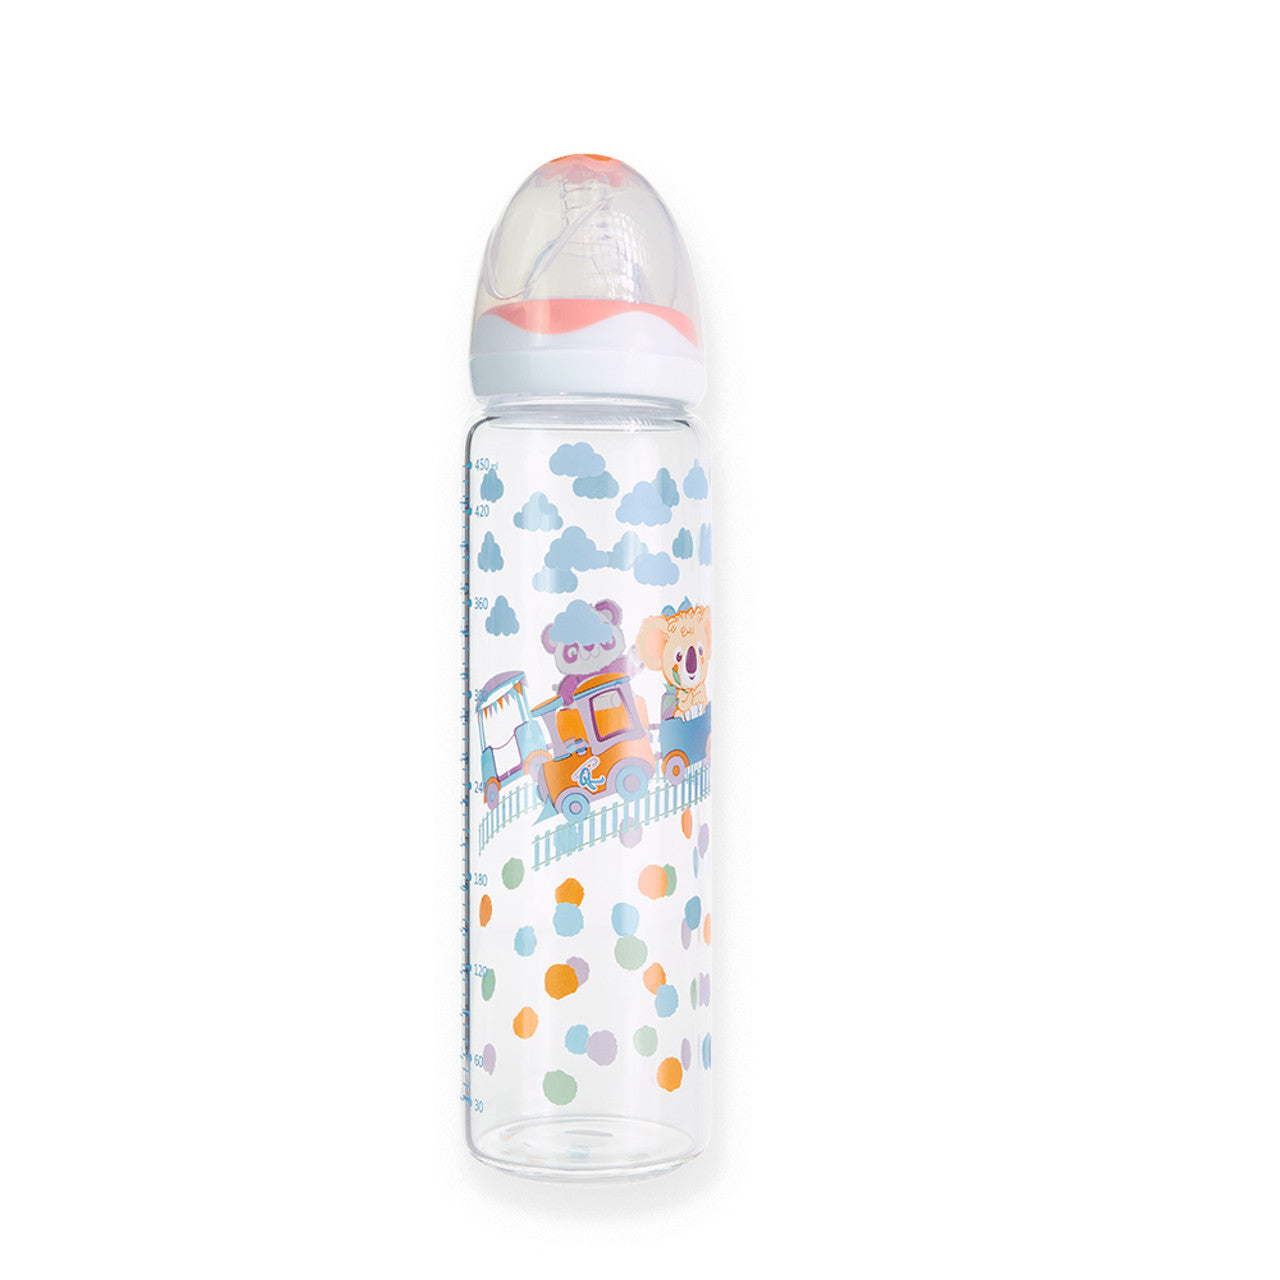 Rearz - Adult Baby Bottle - Critter Caboose